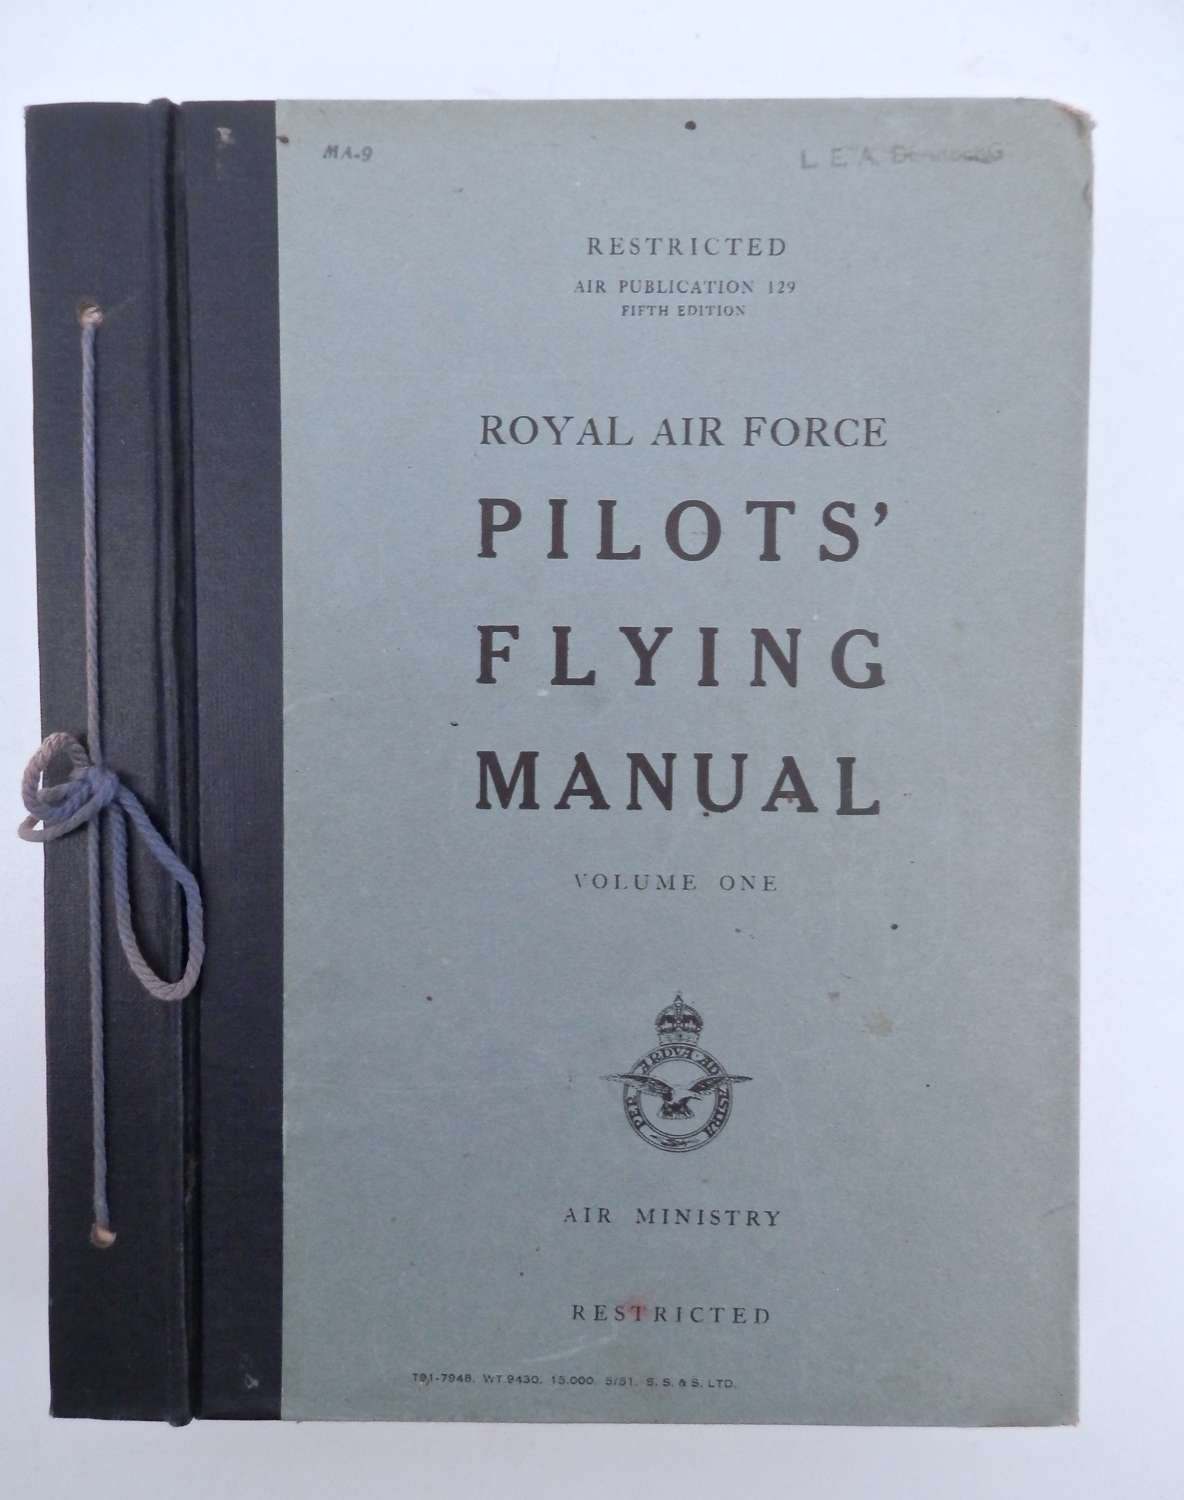 RAF Pilots flying manual AP129